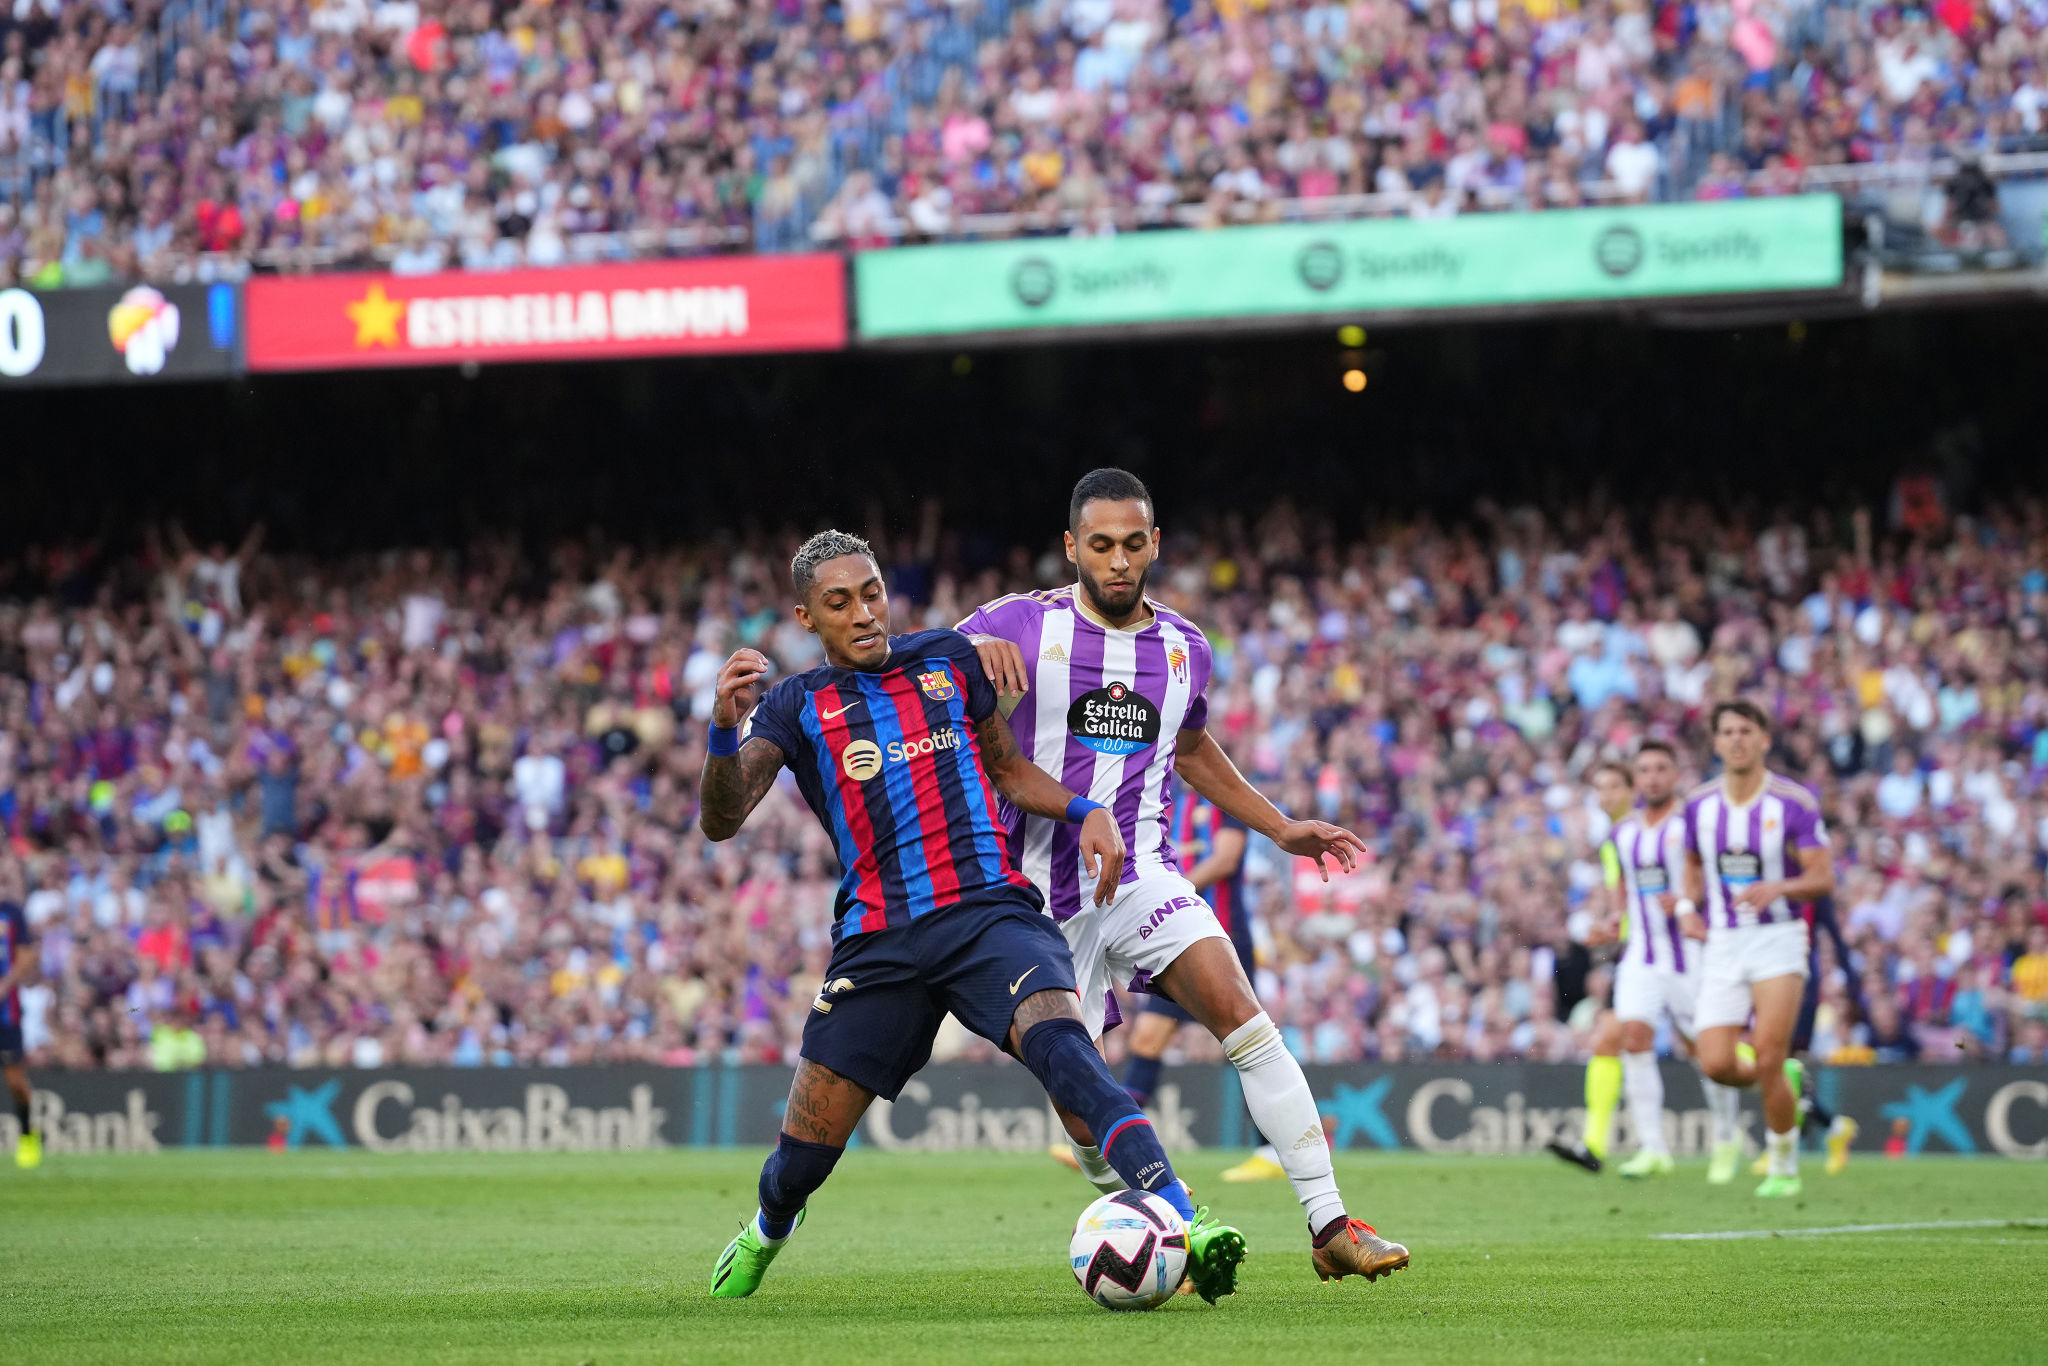 Barcelona vs Real Valladolid Lewandowski's brace sinks Valladolid 4-0 at Spotify Camp Nou